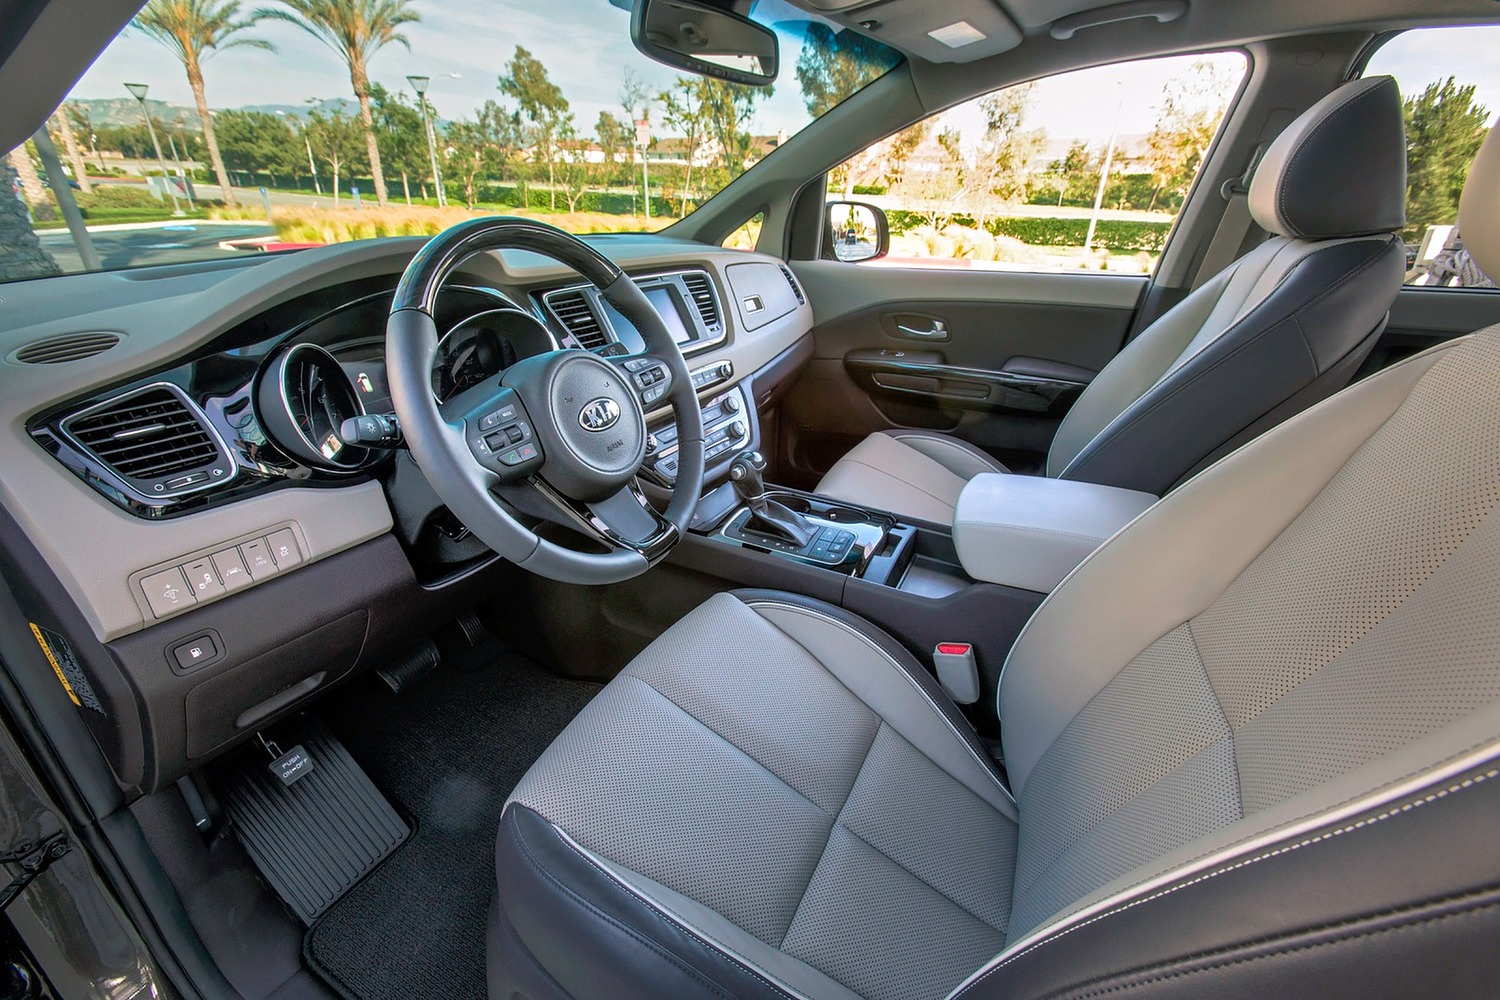 Kia Sedona SX Limited Passenger Minivan Interior Shown (2016 model year shown)